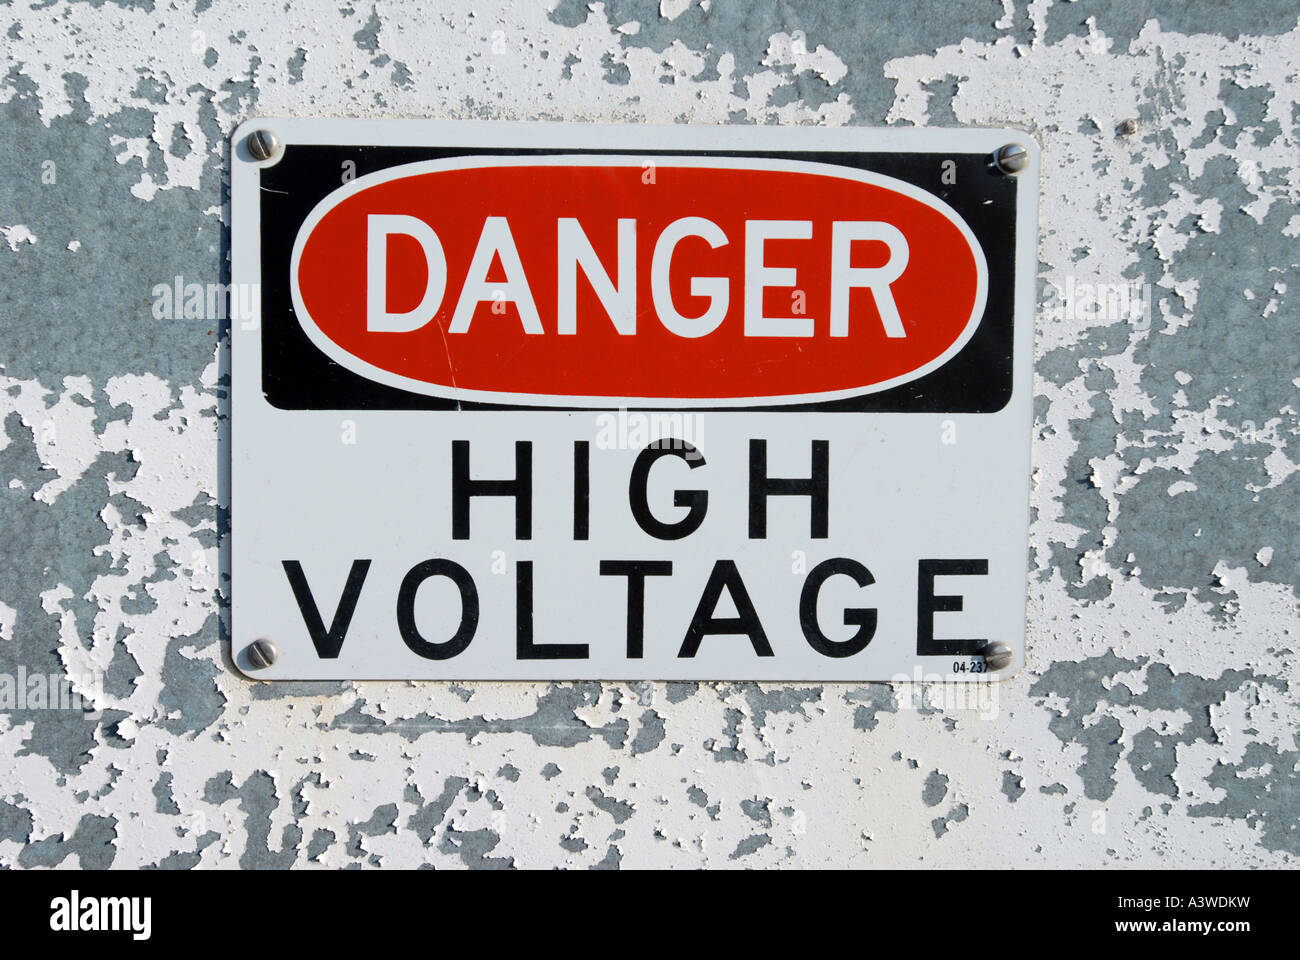 Danger High Voltage sign Stock Photo